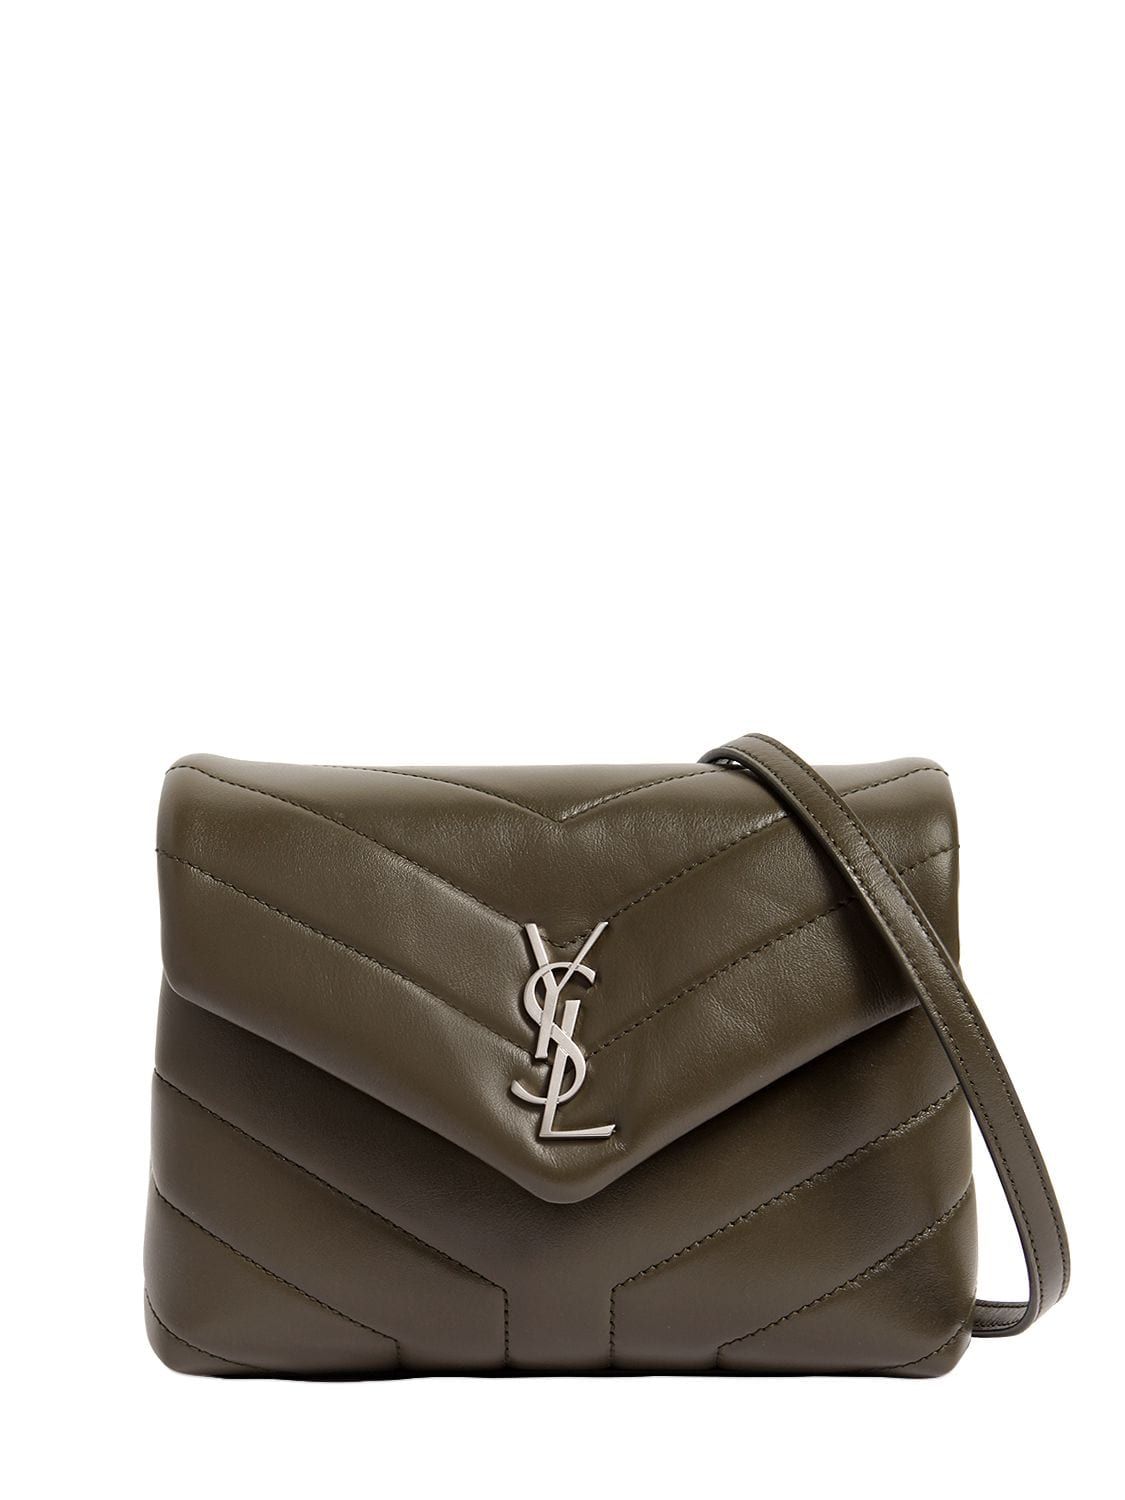 Saint Laurent Toy Loulou Monogram Leather Bag In Khaki